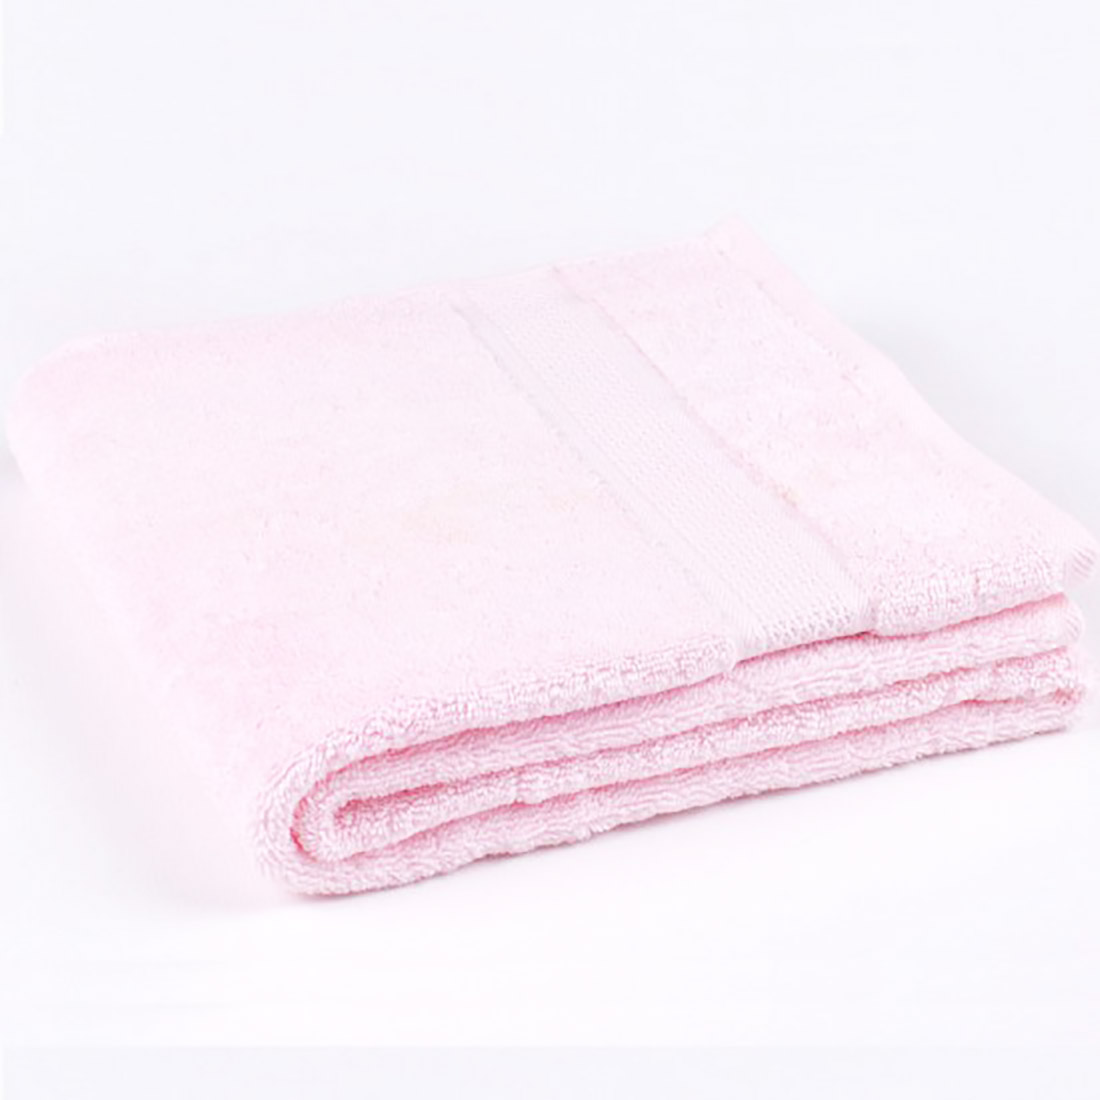 OrganicEra Organic Towel, Bozcaada Pink